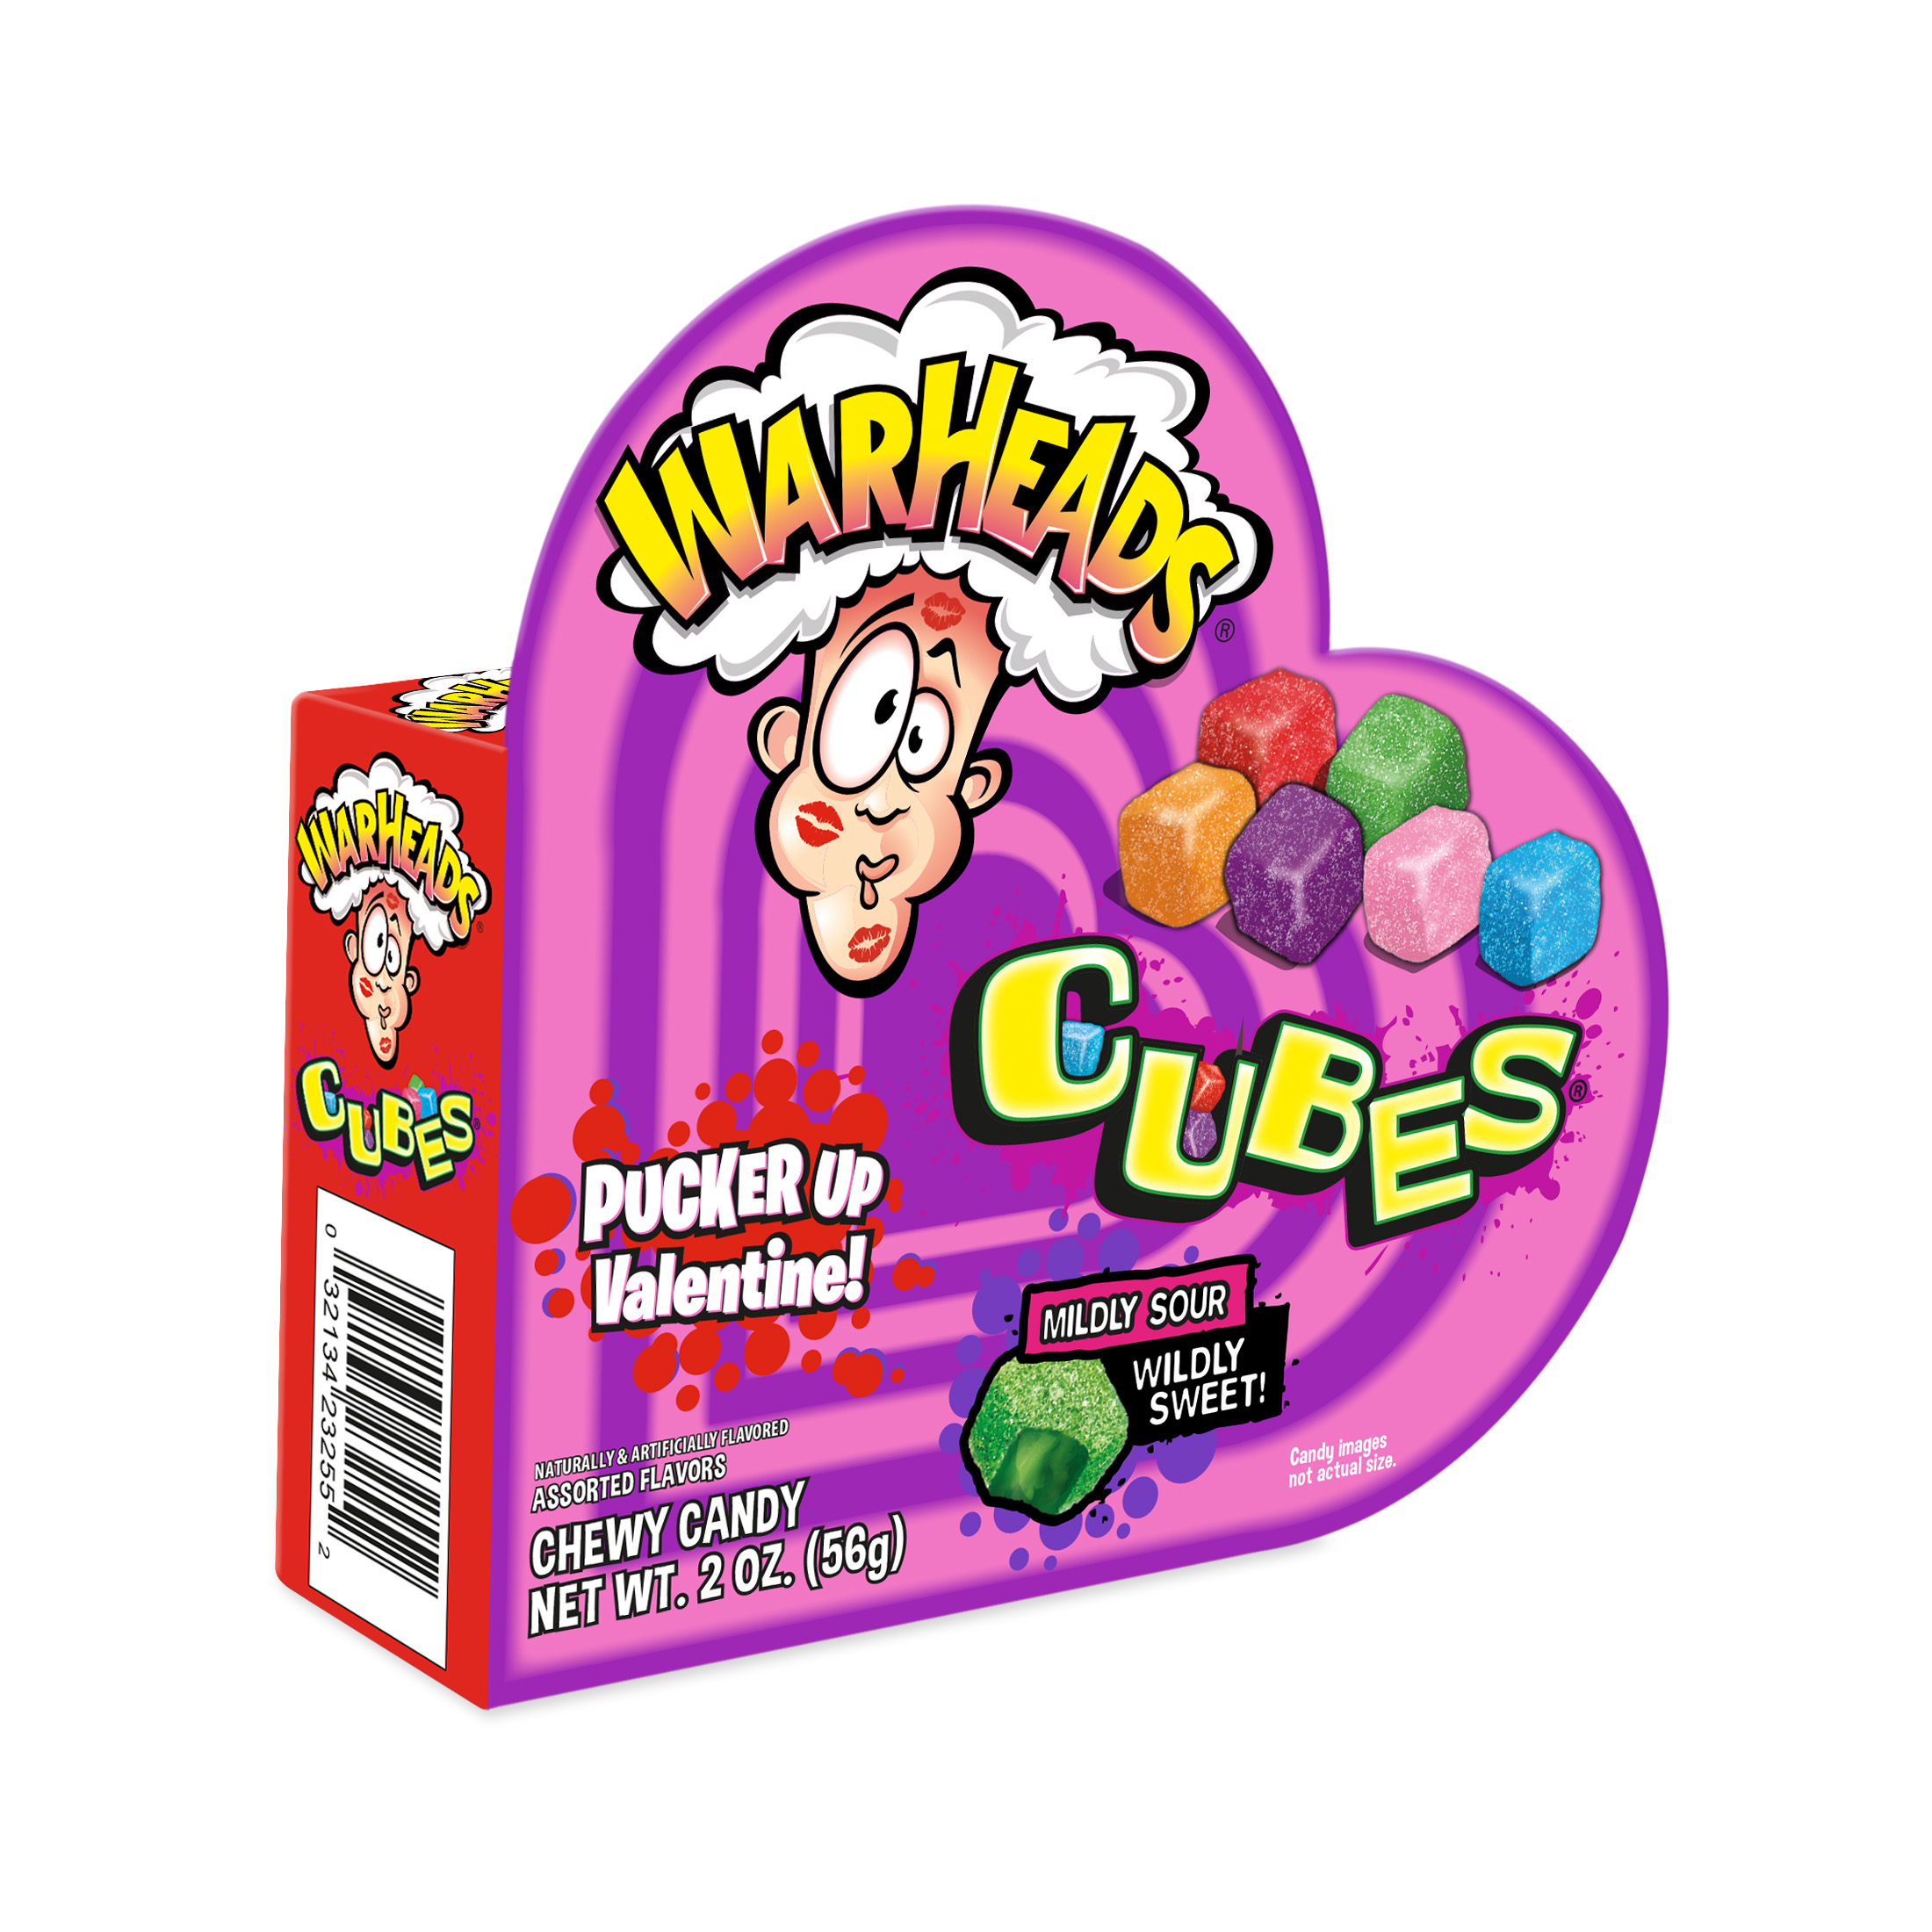 Warheads Cubes Heart Box, 2 oz. - image 2 of 5